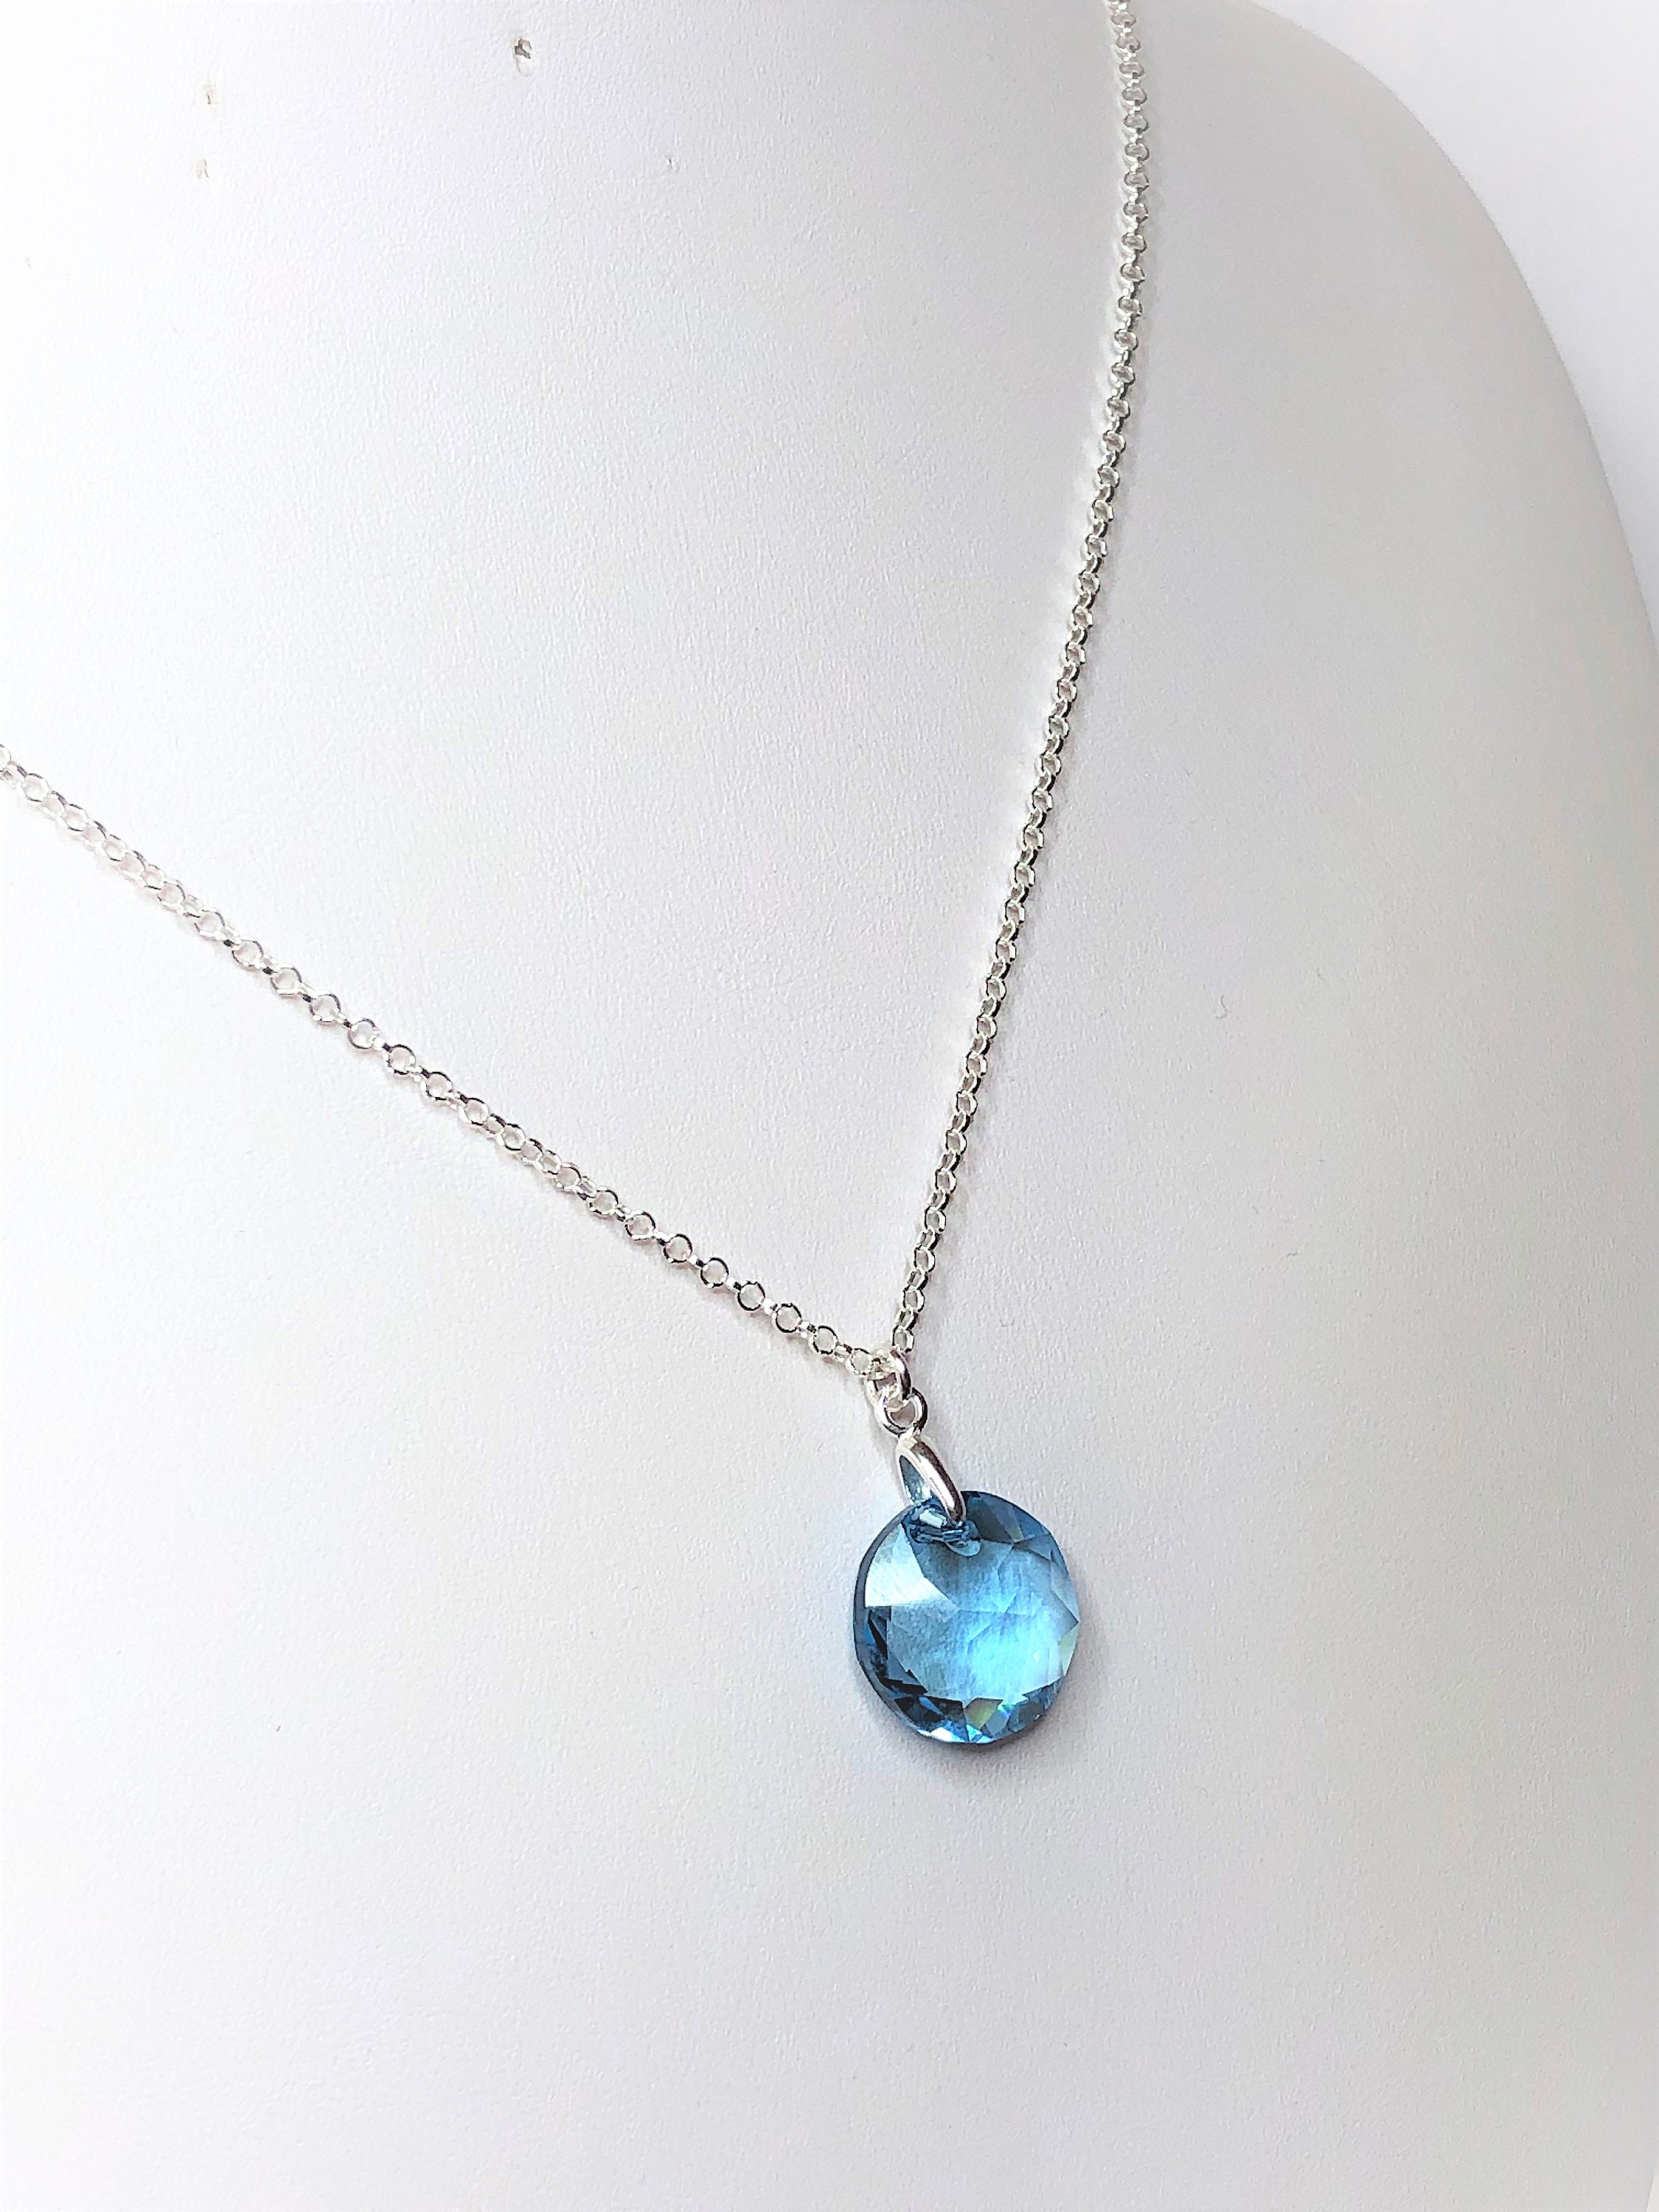 Aquamarine Crystal Pendant Sparkly Crystal Necklace Sky | Etsy